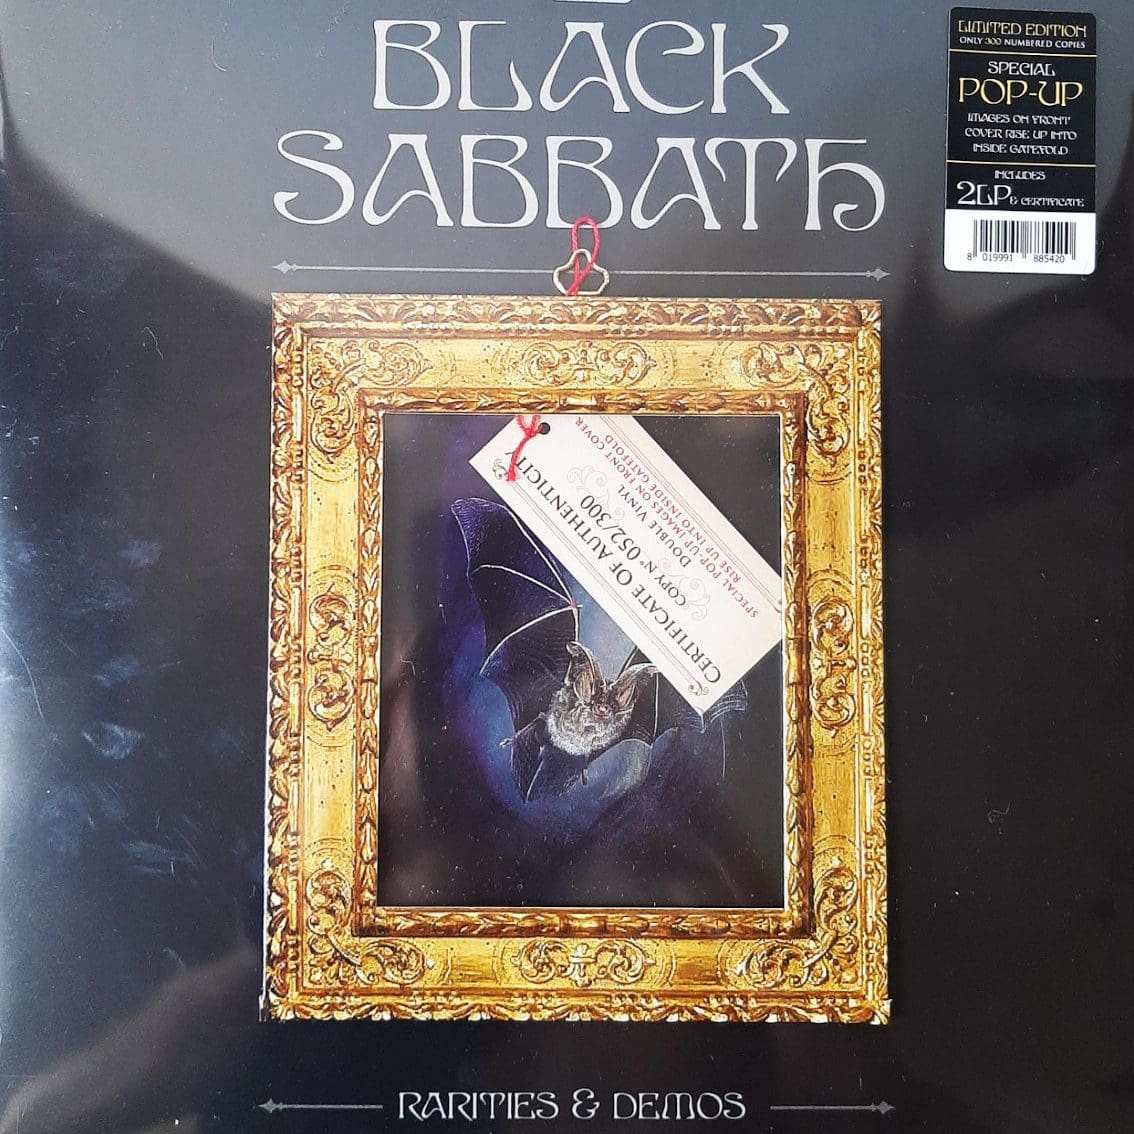 Rustblade to release Black Sabbath's'Rarities & Demos' as deluxe gatefold double vinyl